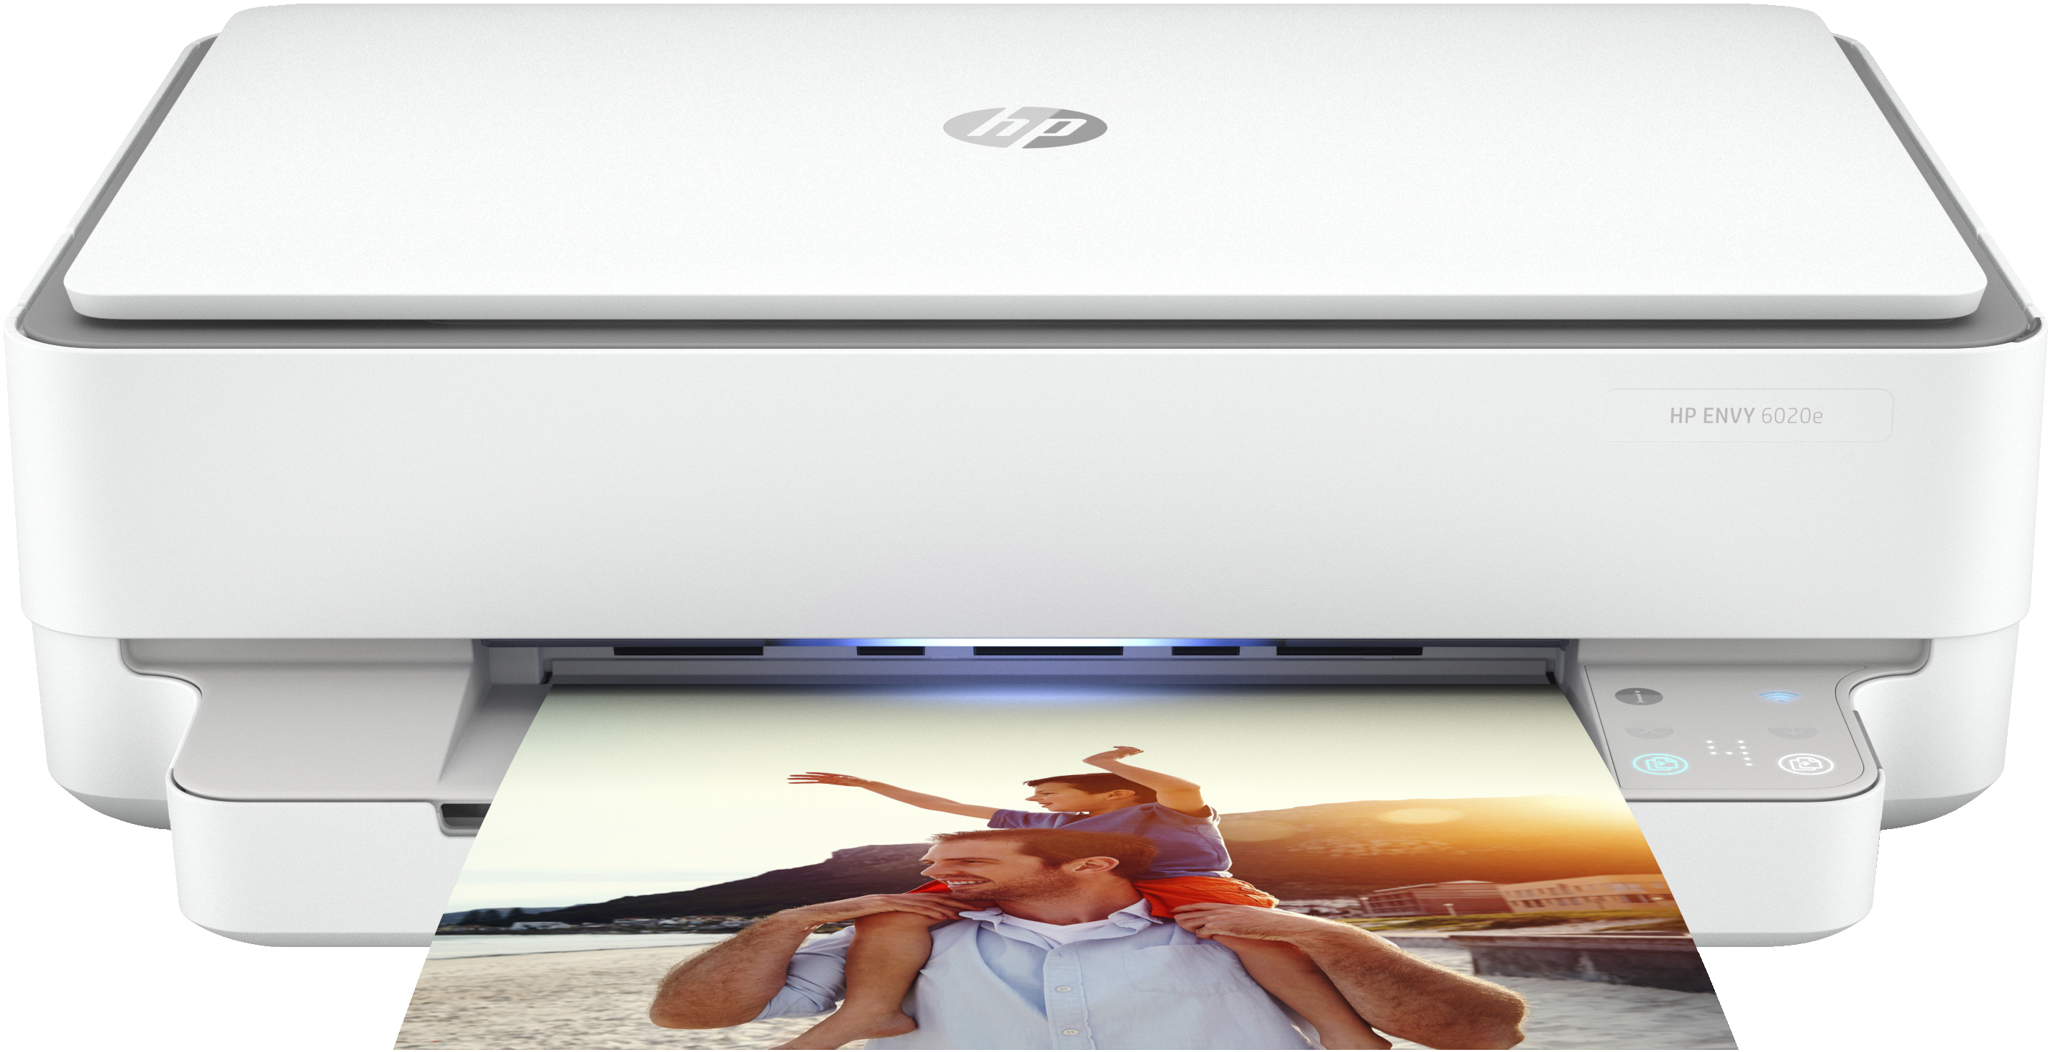 Bild von HP ENVY 6020e - Thermal Inkjet - Farbdruck - 4800 x 1200 DPI - Farbkopieren - A4 - Grau - Weiß